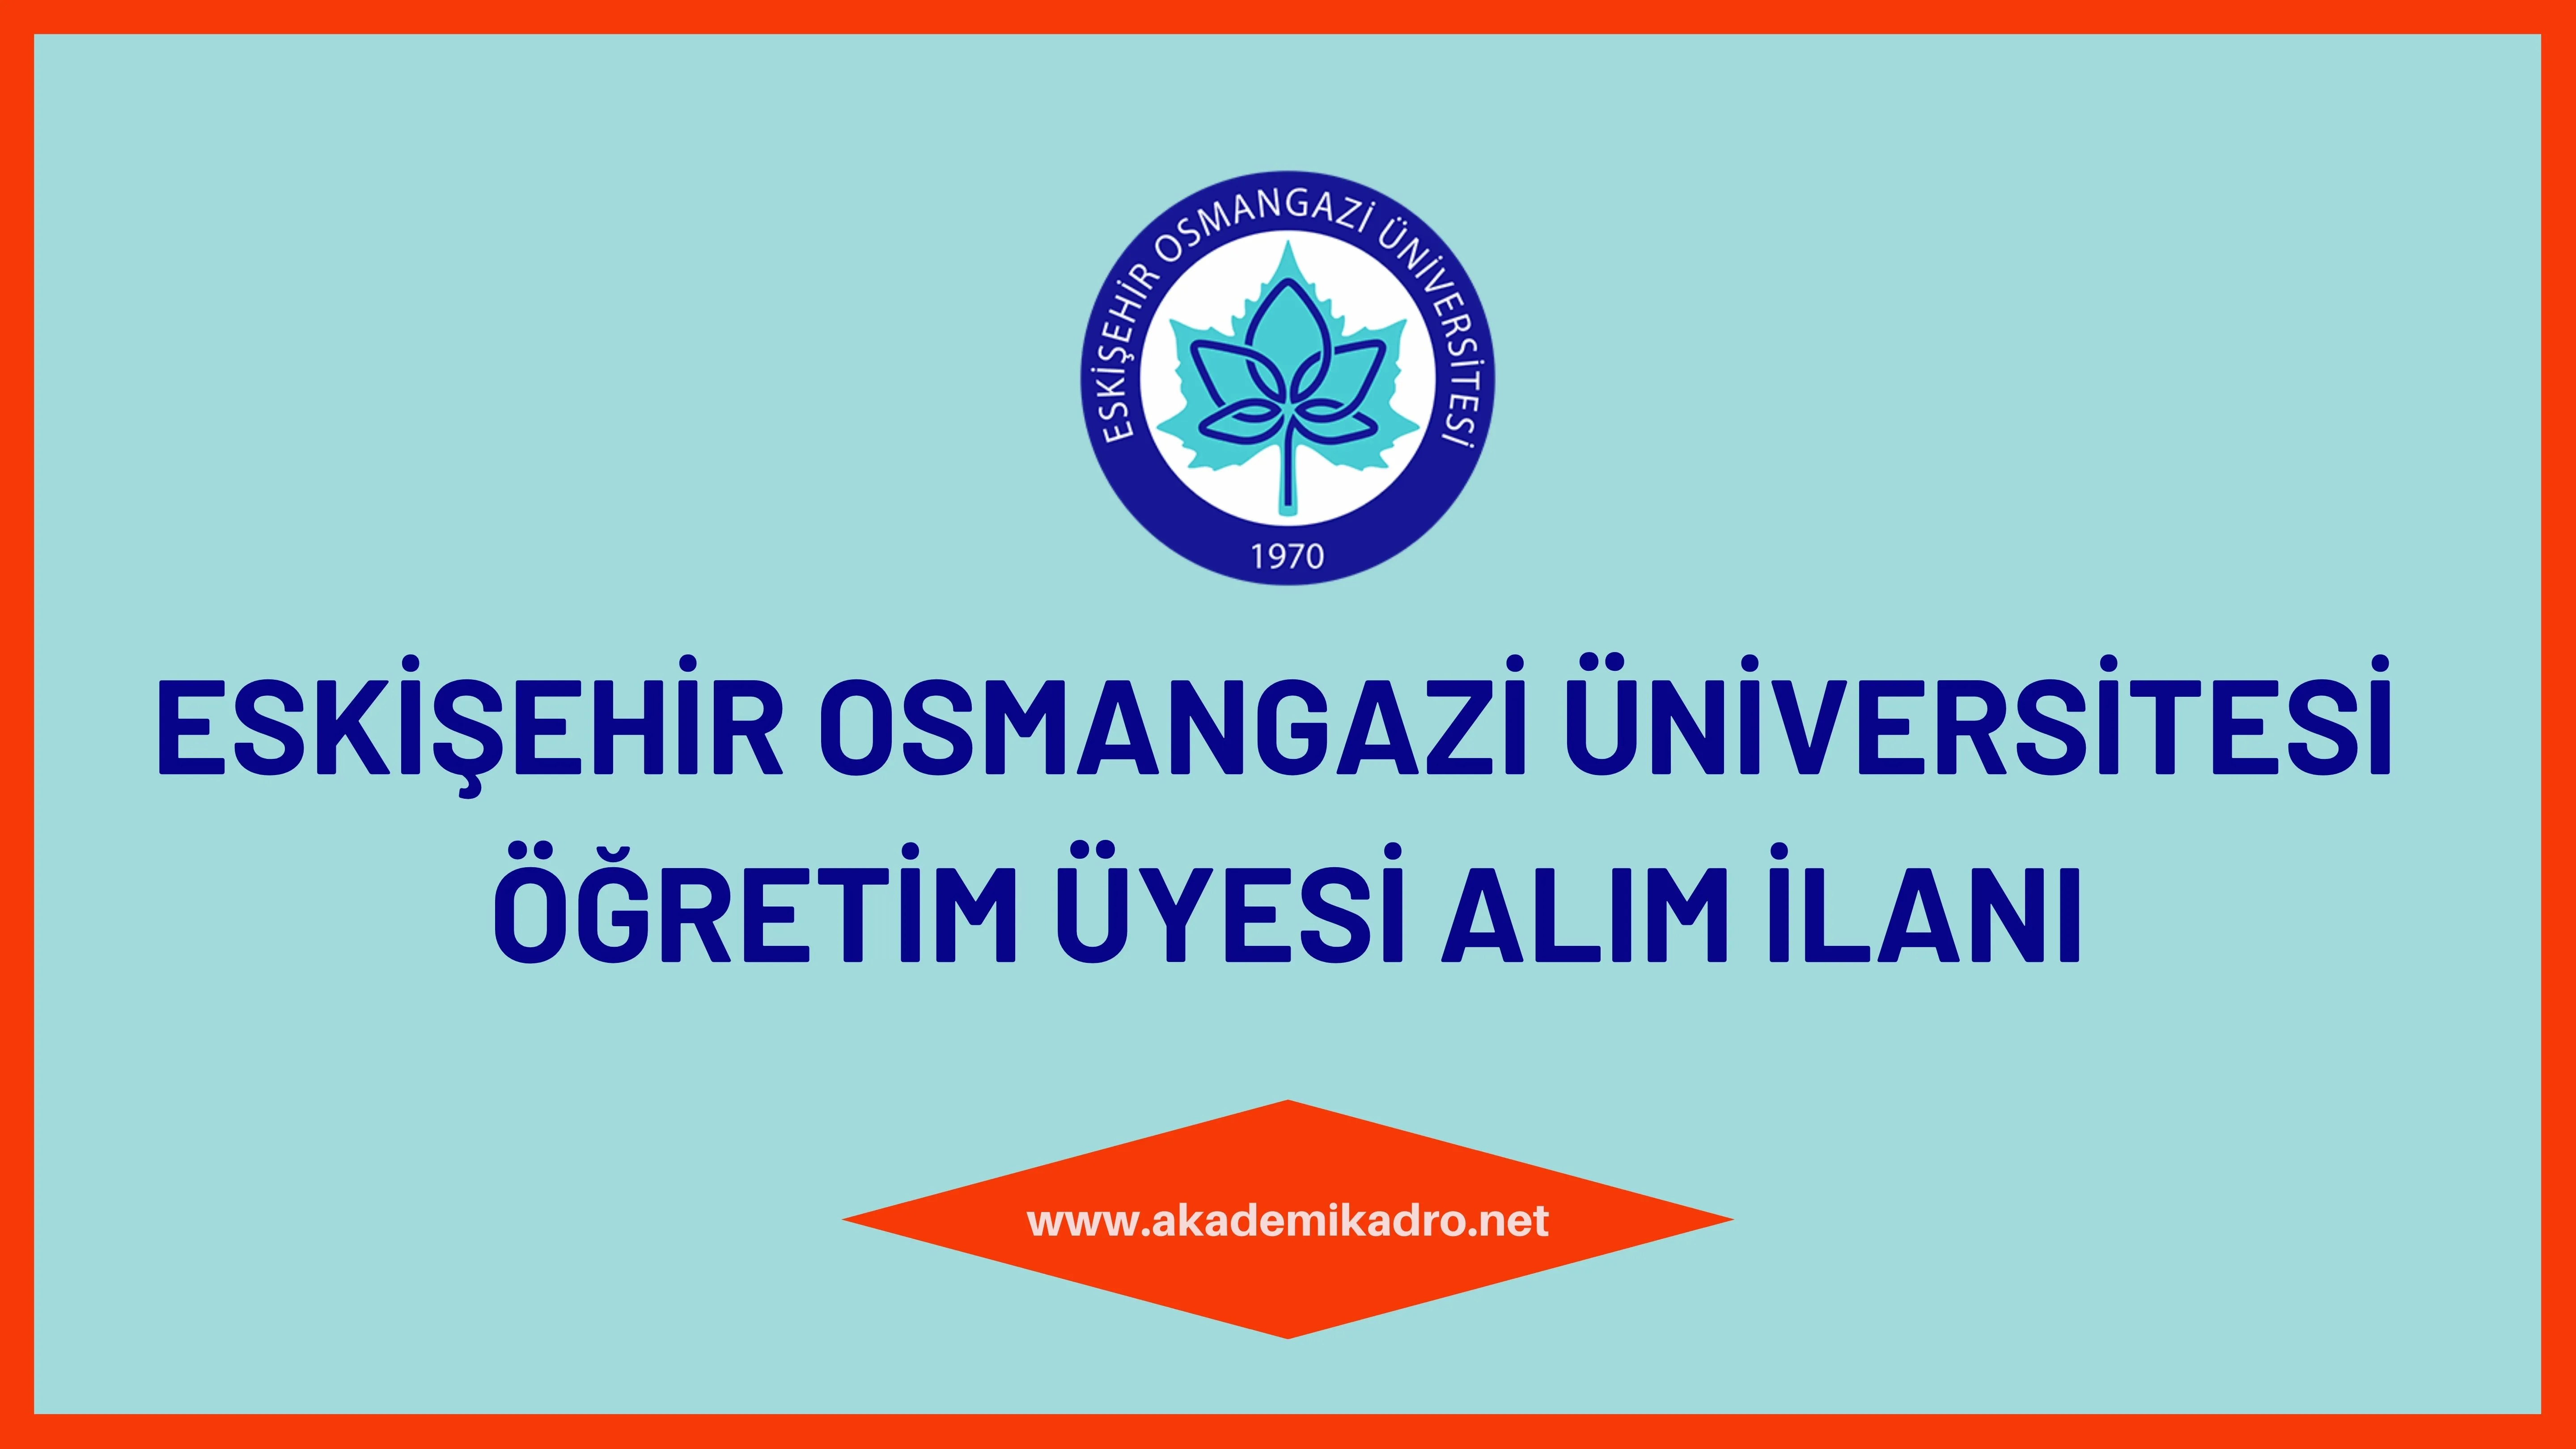 Eskişehir Osmangazi Üniversitesi 55 akademik personel alacak